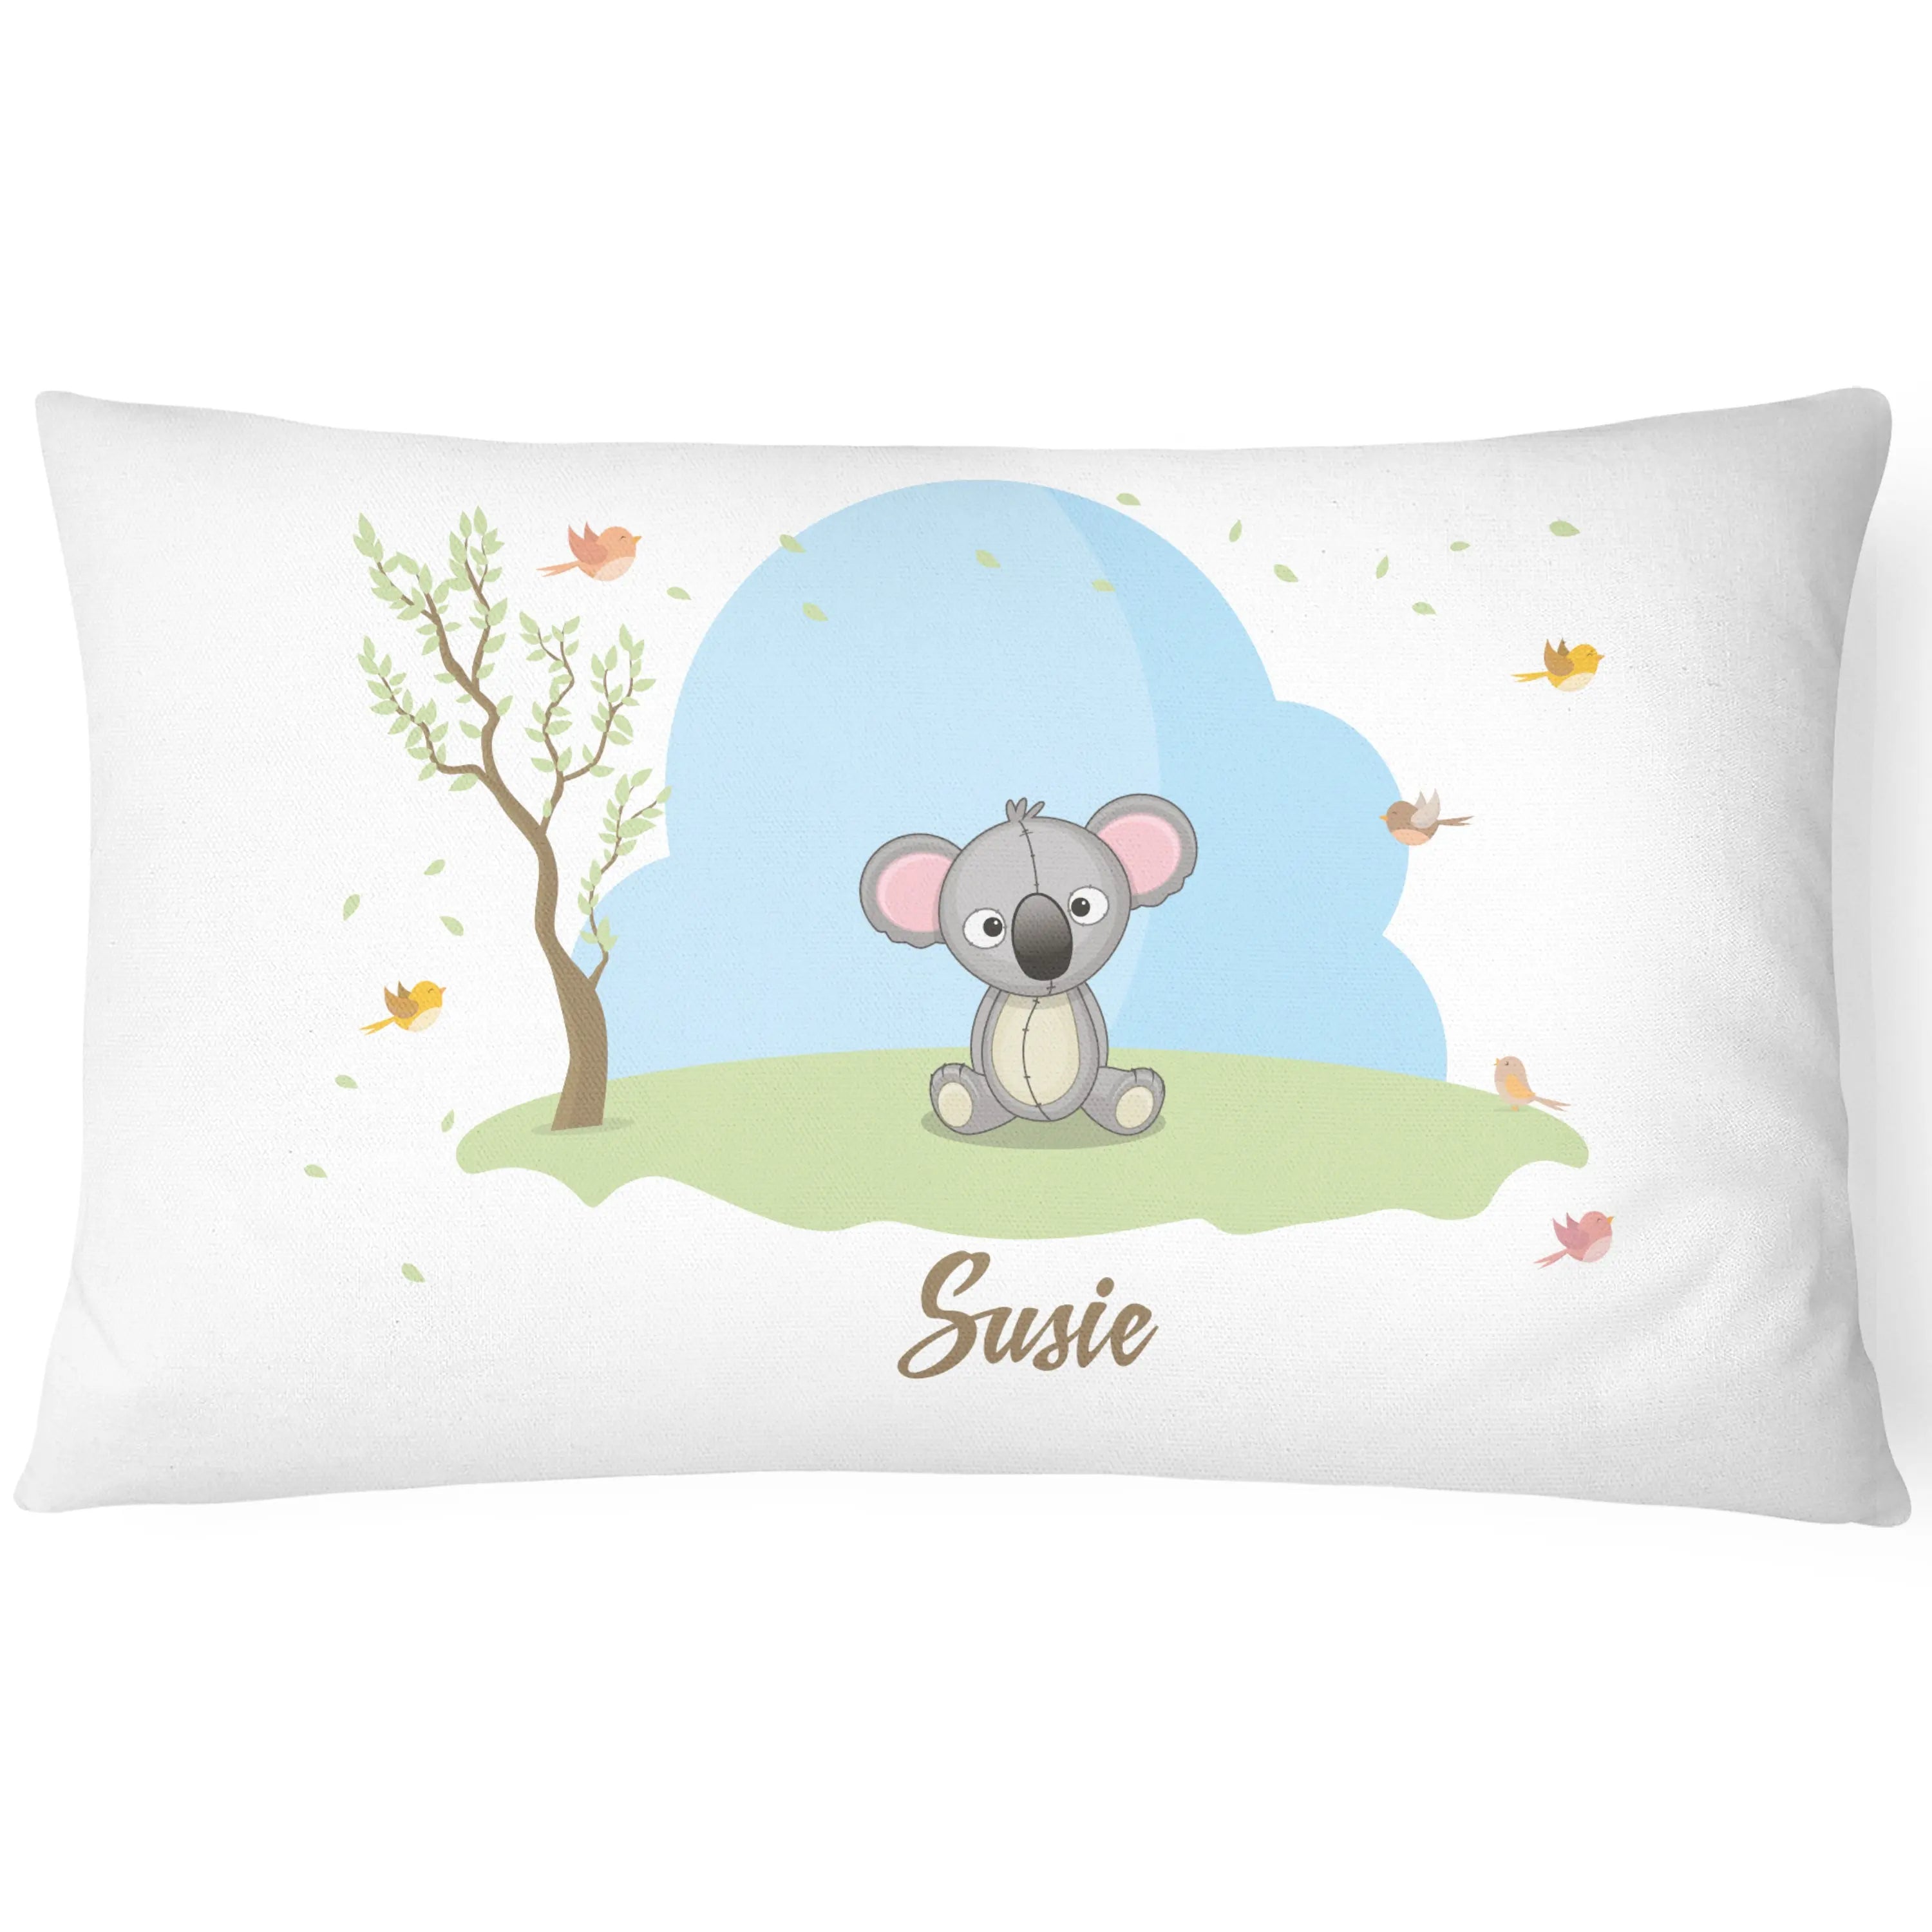 Personalised Children's Pillowcase Cute Animal - Lovely - CushionPop